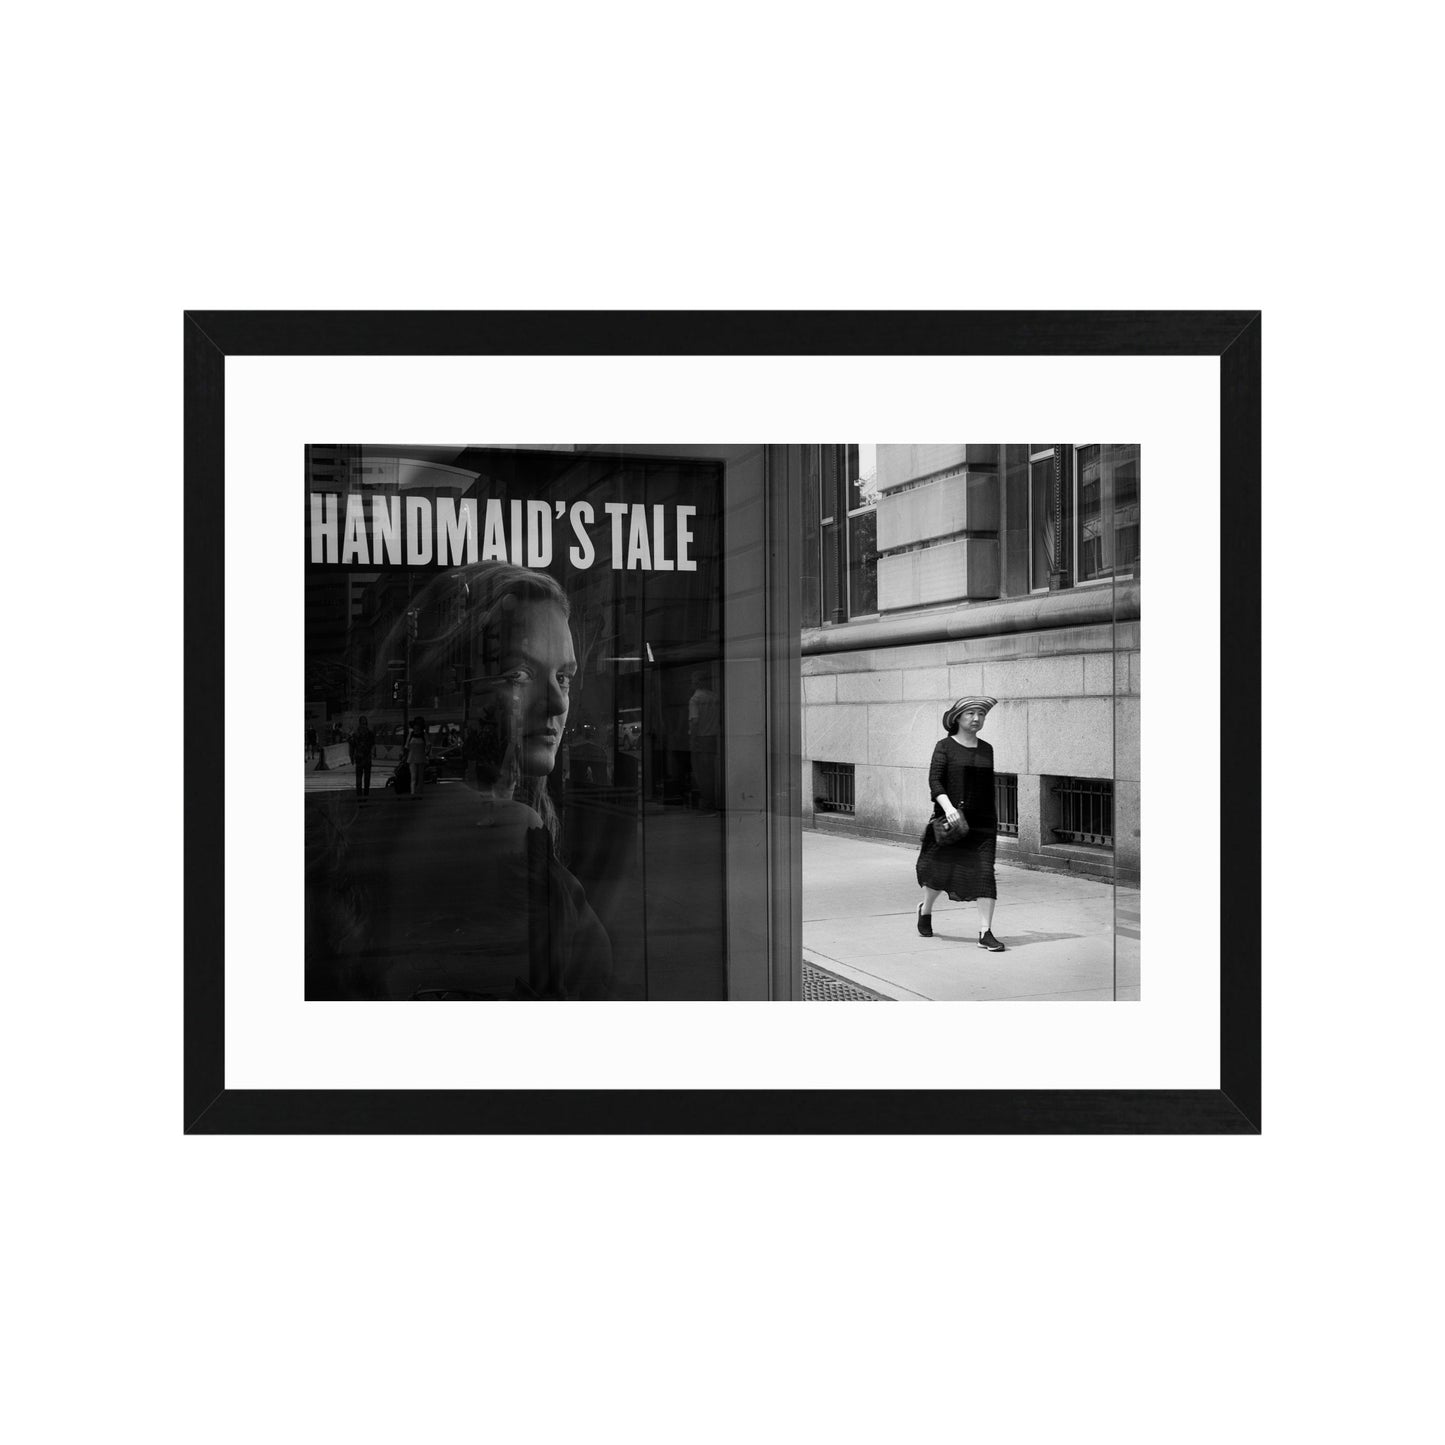 Handmaid's Tale by Paul Lambert